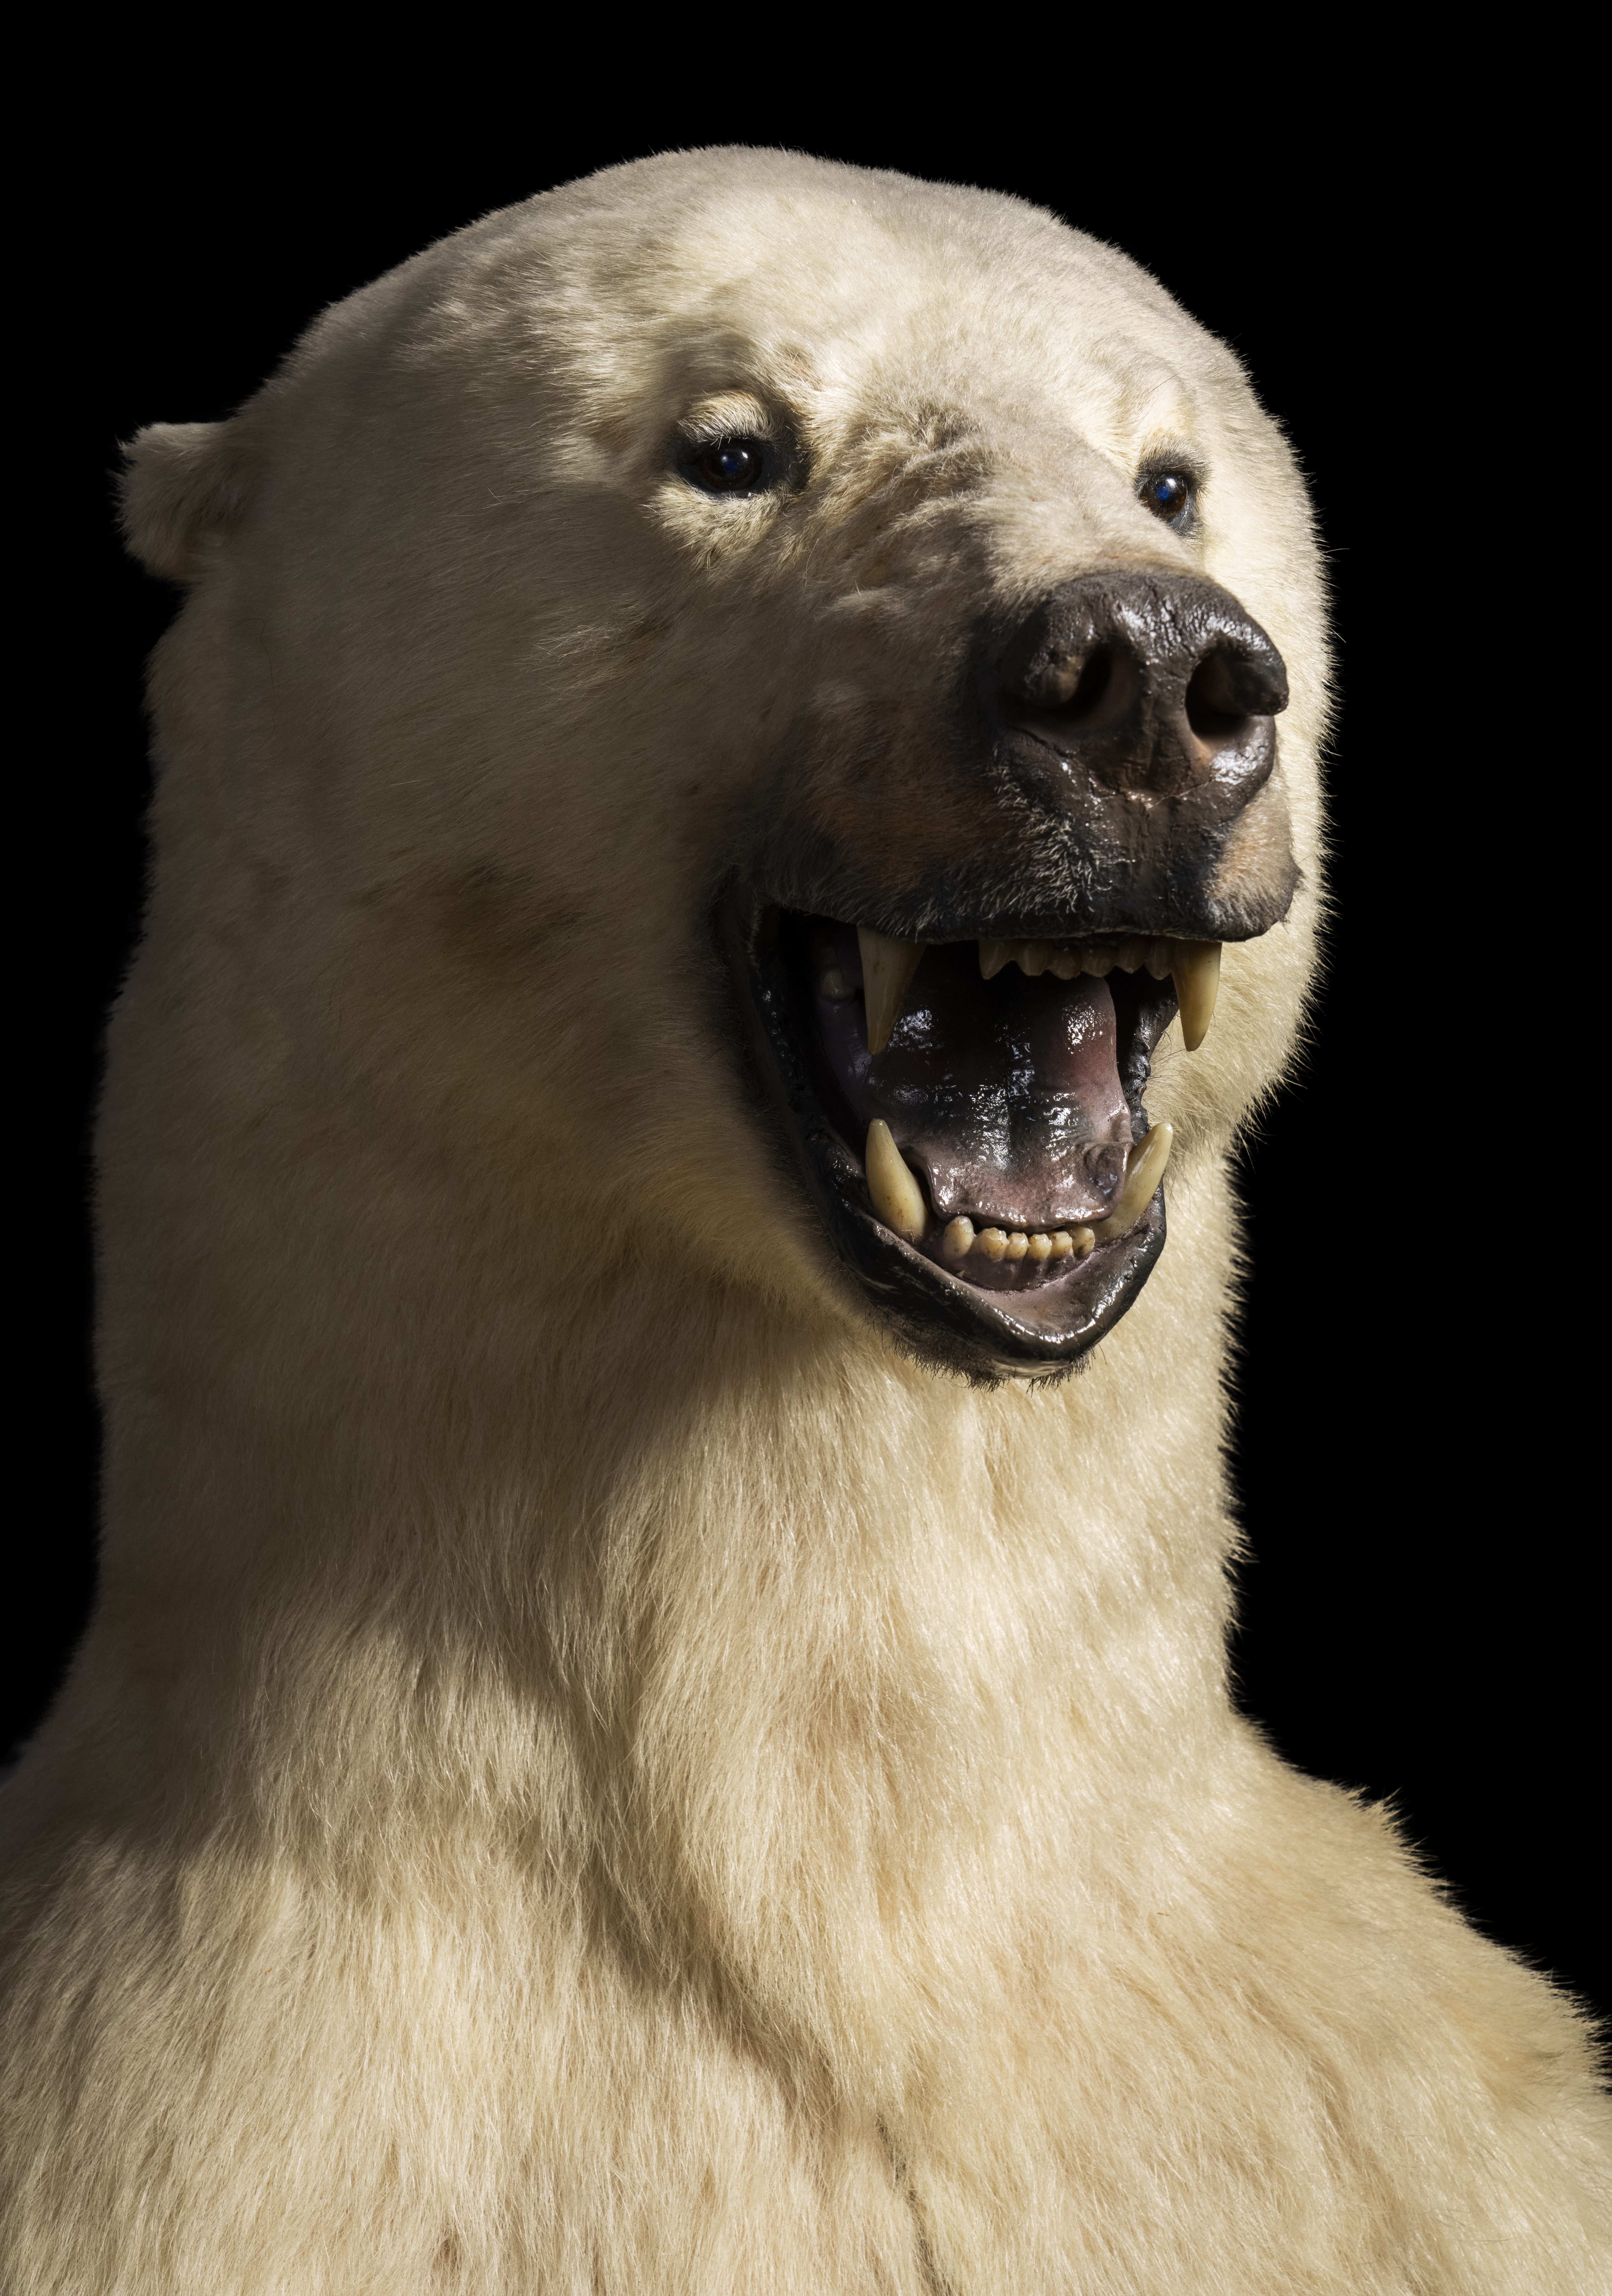 The Wonders of Wildlife Museum & Aquarium is now home to this polar bear mount.